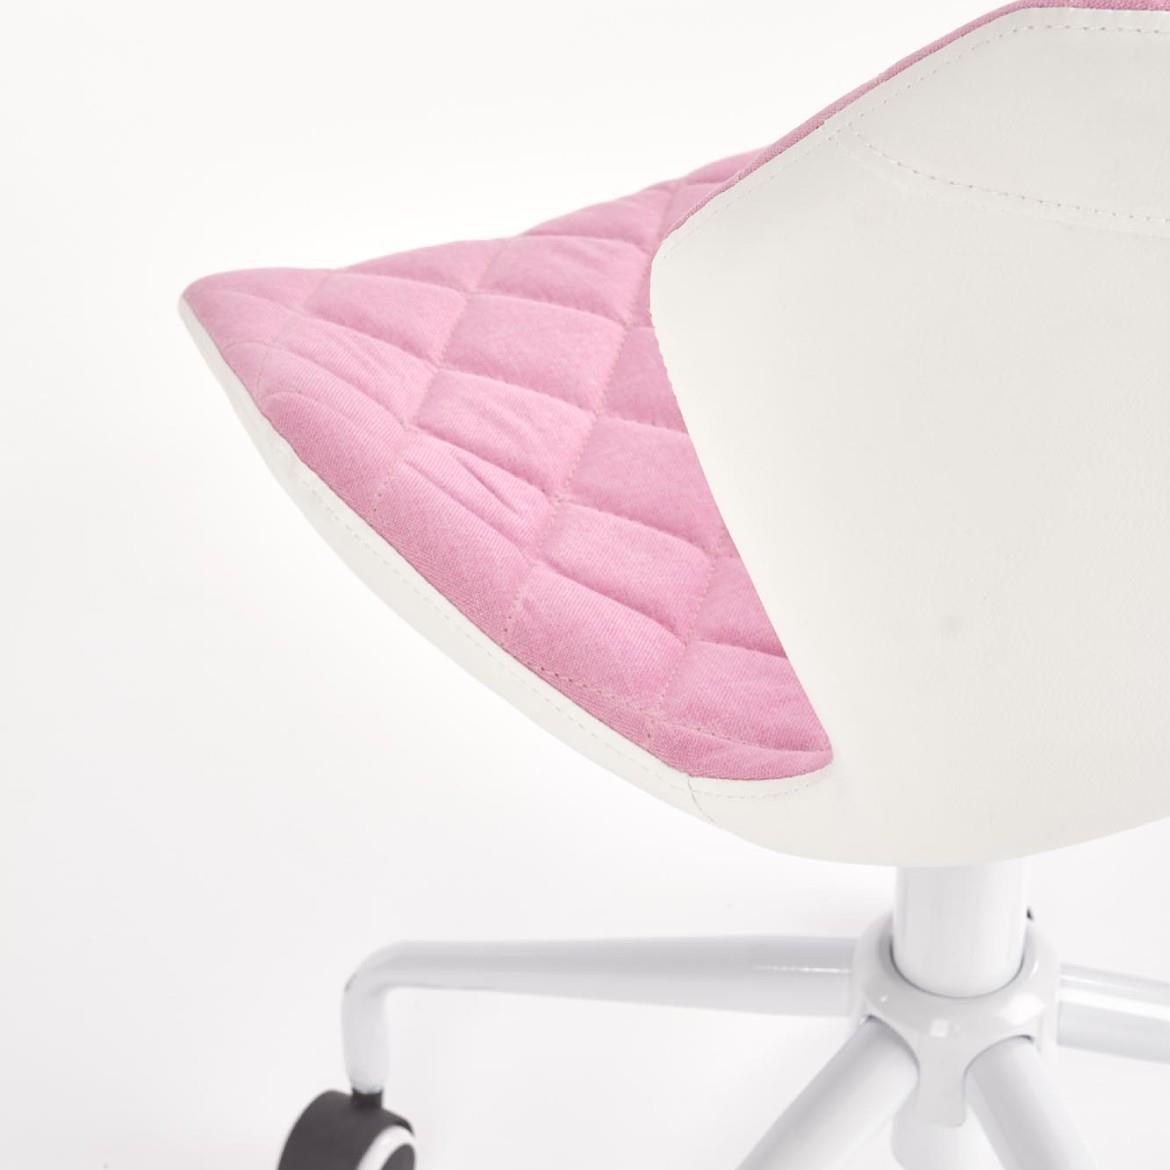 Matrix 3 kancelarijska stolica 48x57x88 cm roze/bela